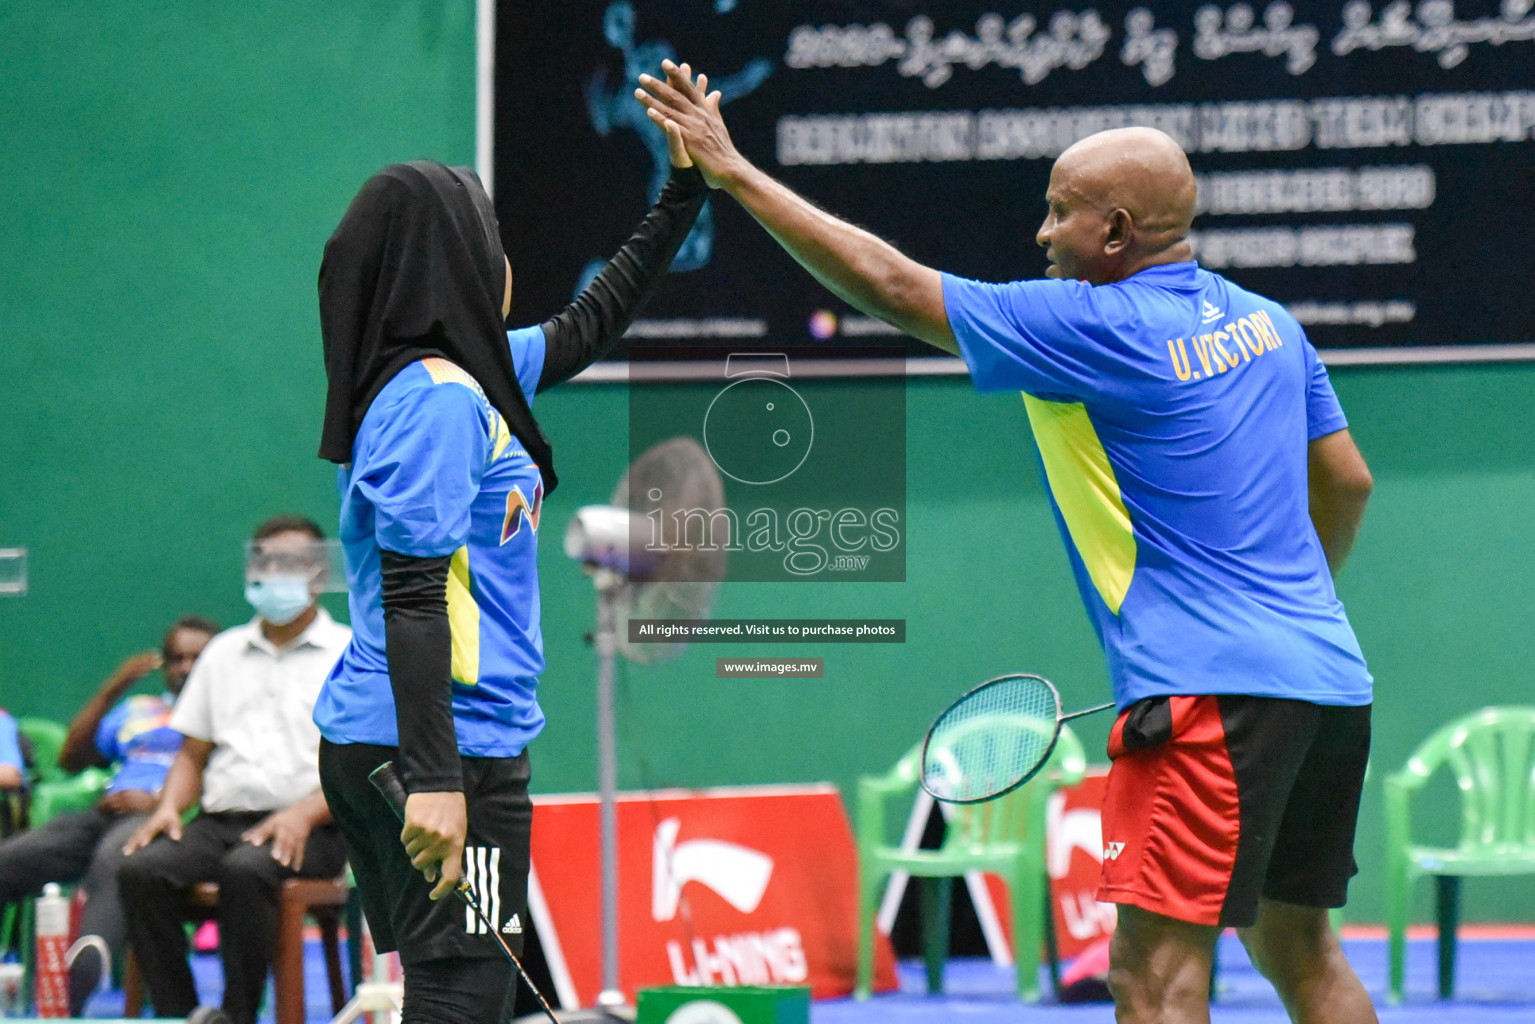 (Badminton Association mixed team championship-2020,25th Dec 2020 Photos , Hussain/ Images)